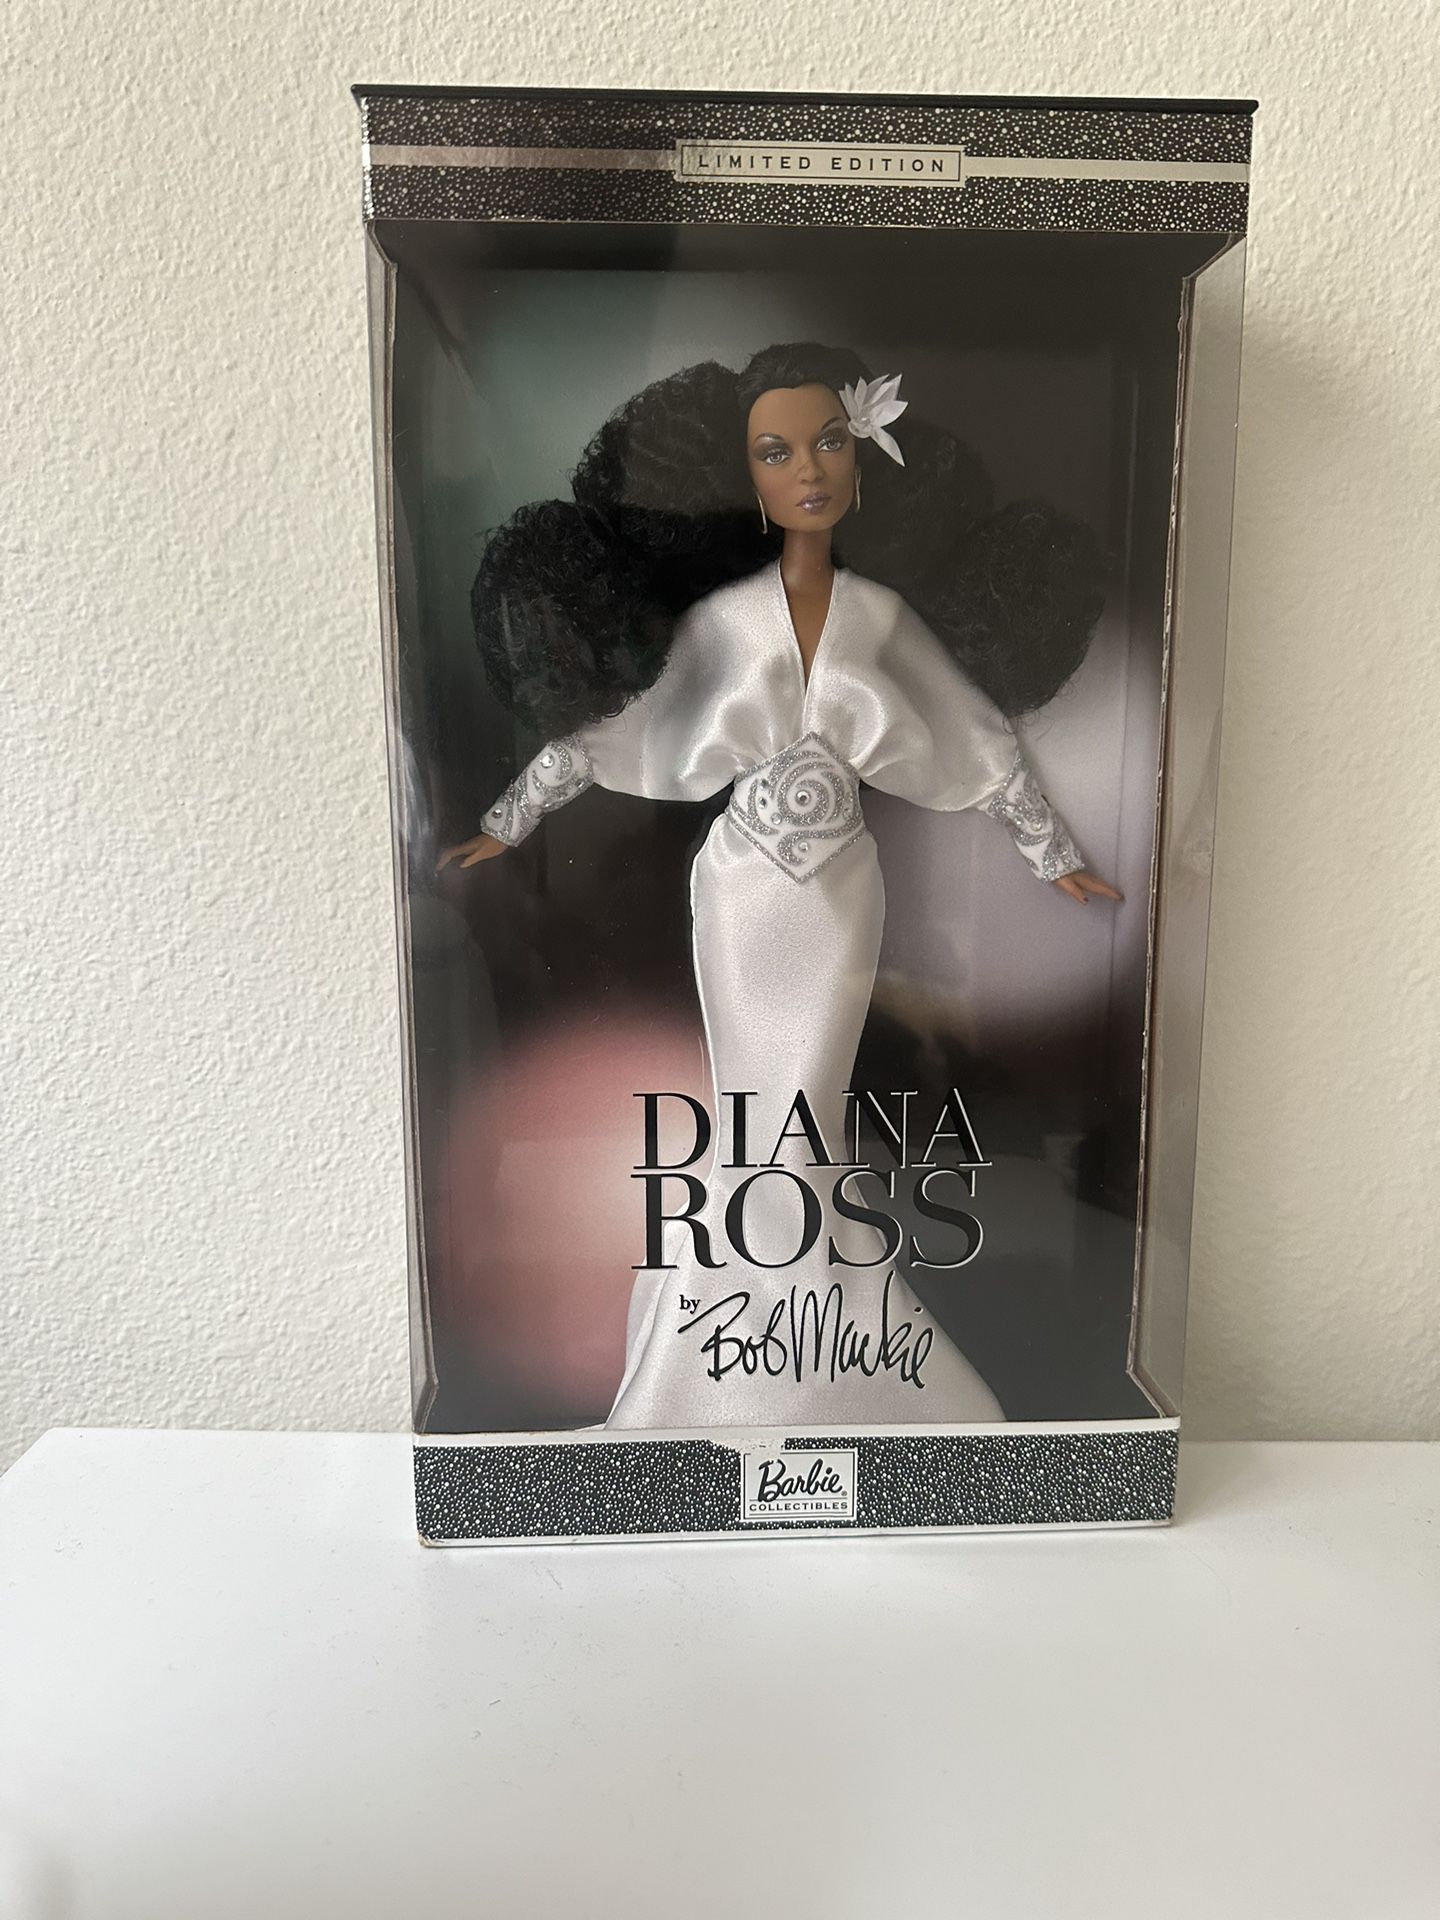 Limited Edition Bob Mackie “Diana Ross” Barbie Doll 